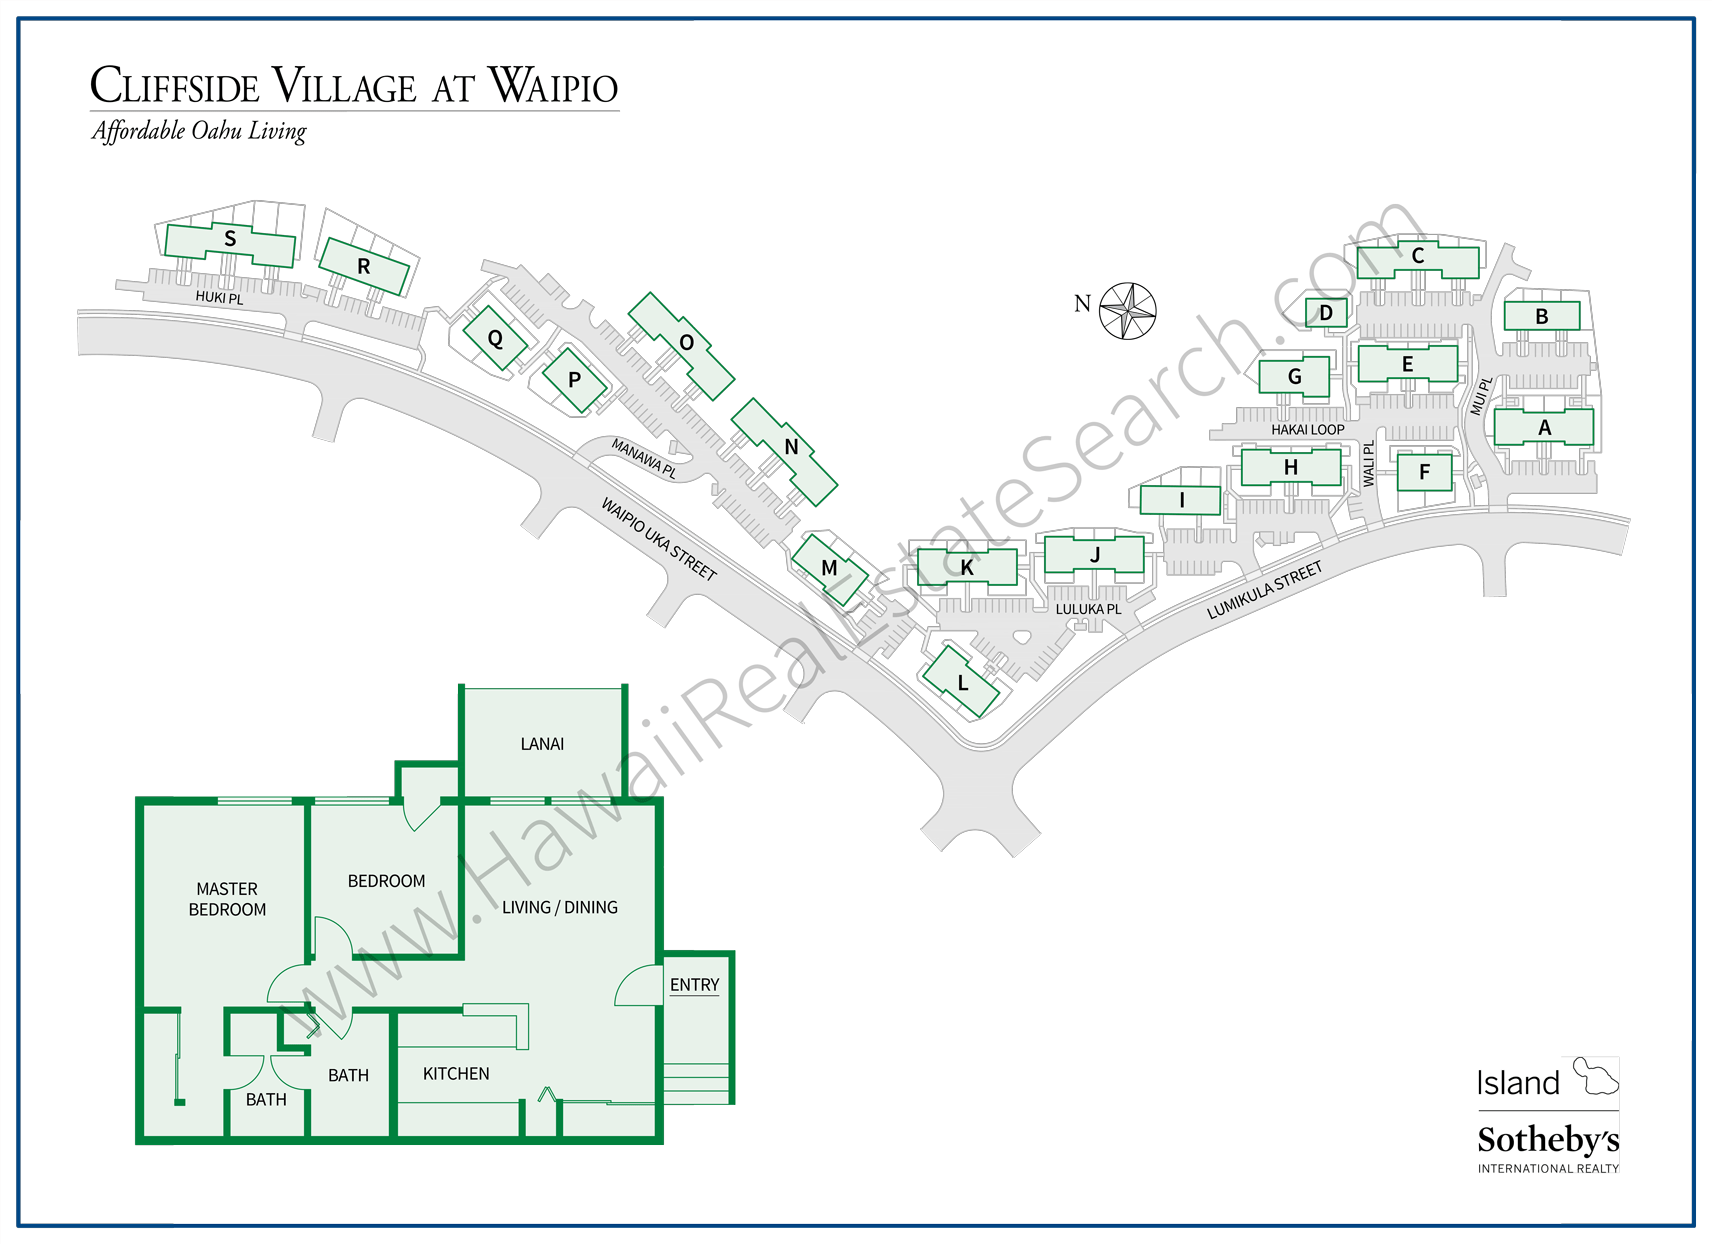 Cliffside Village at Waipio Map